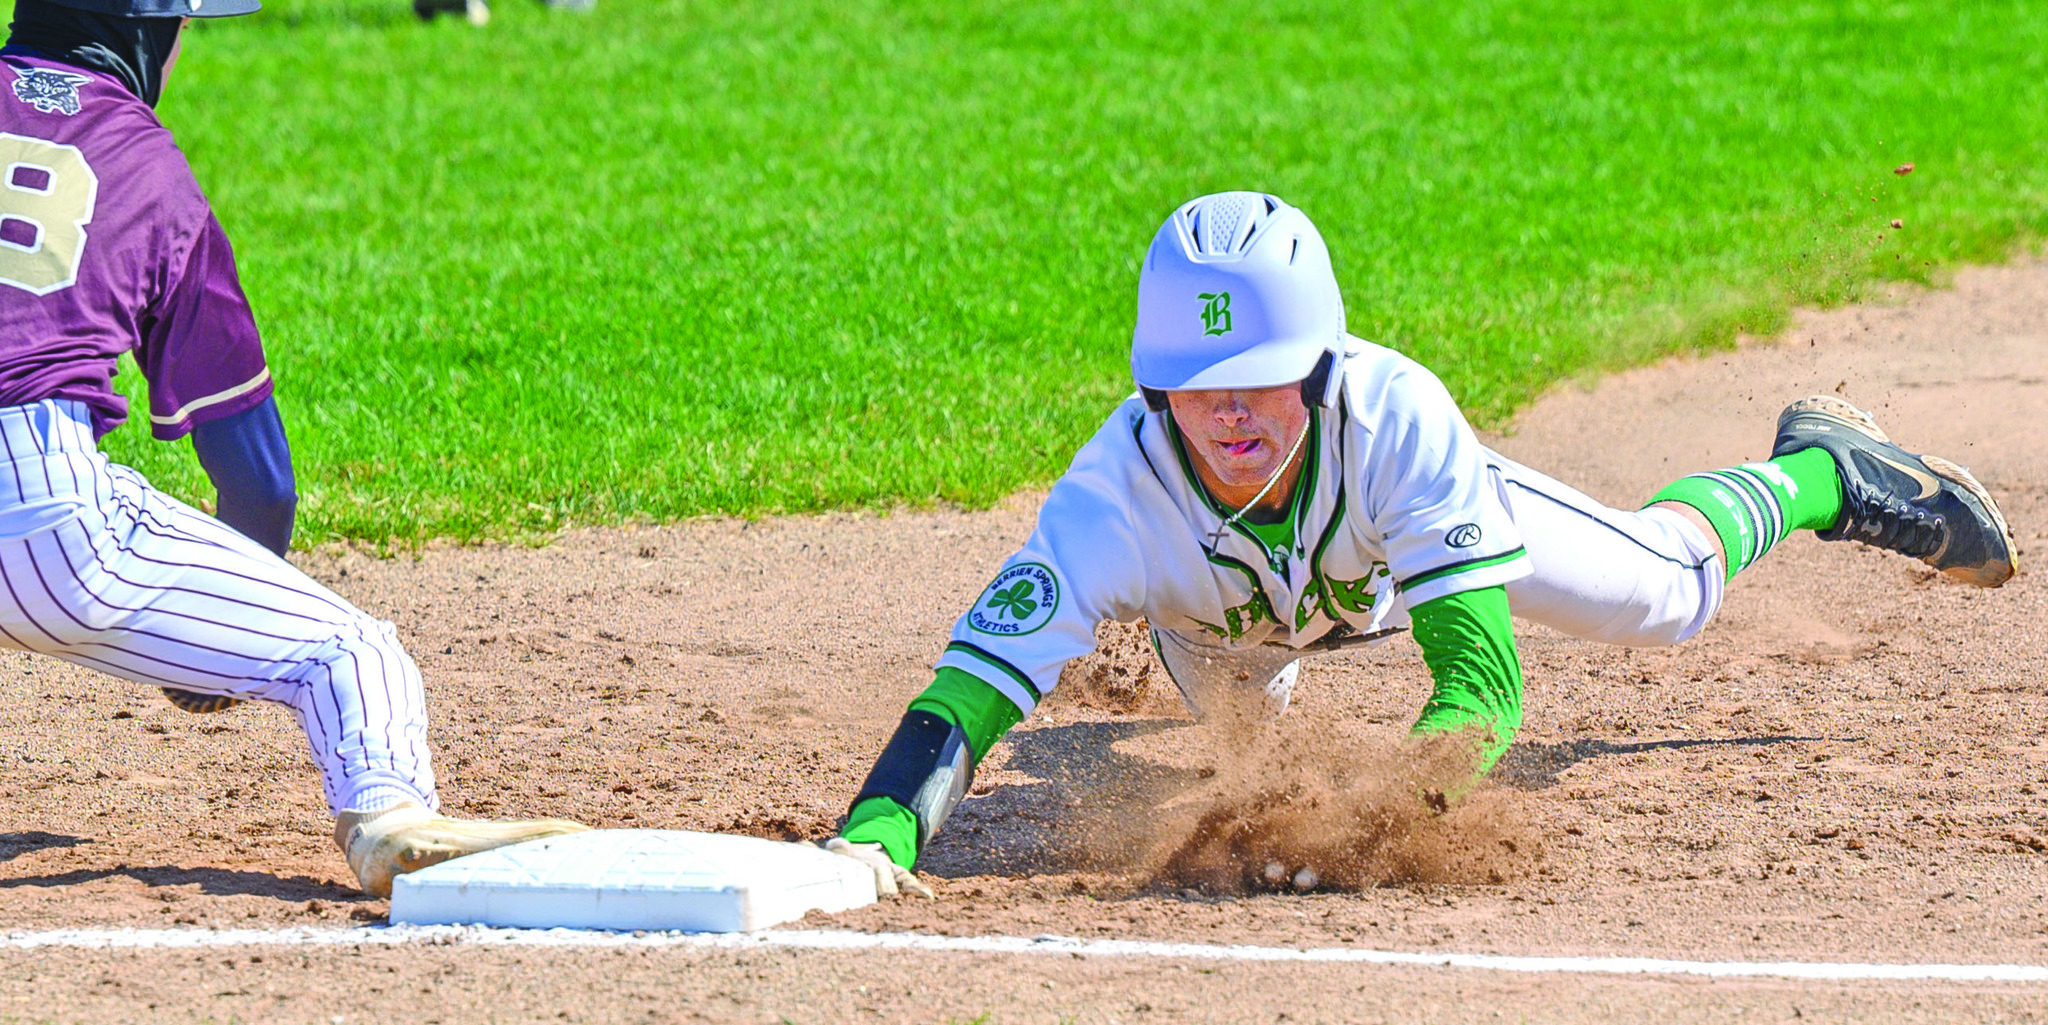 Baseball Action - Player sliding into the bases 2023